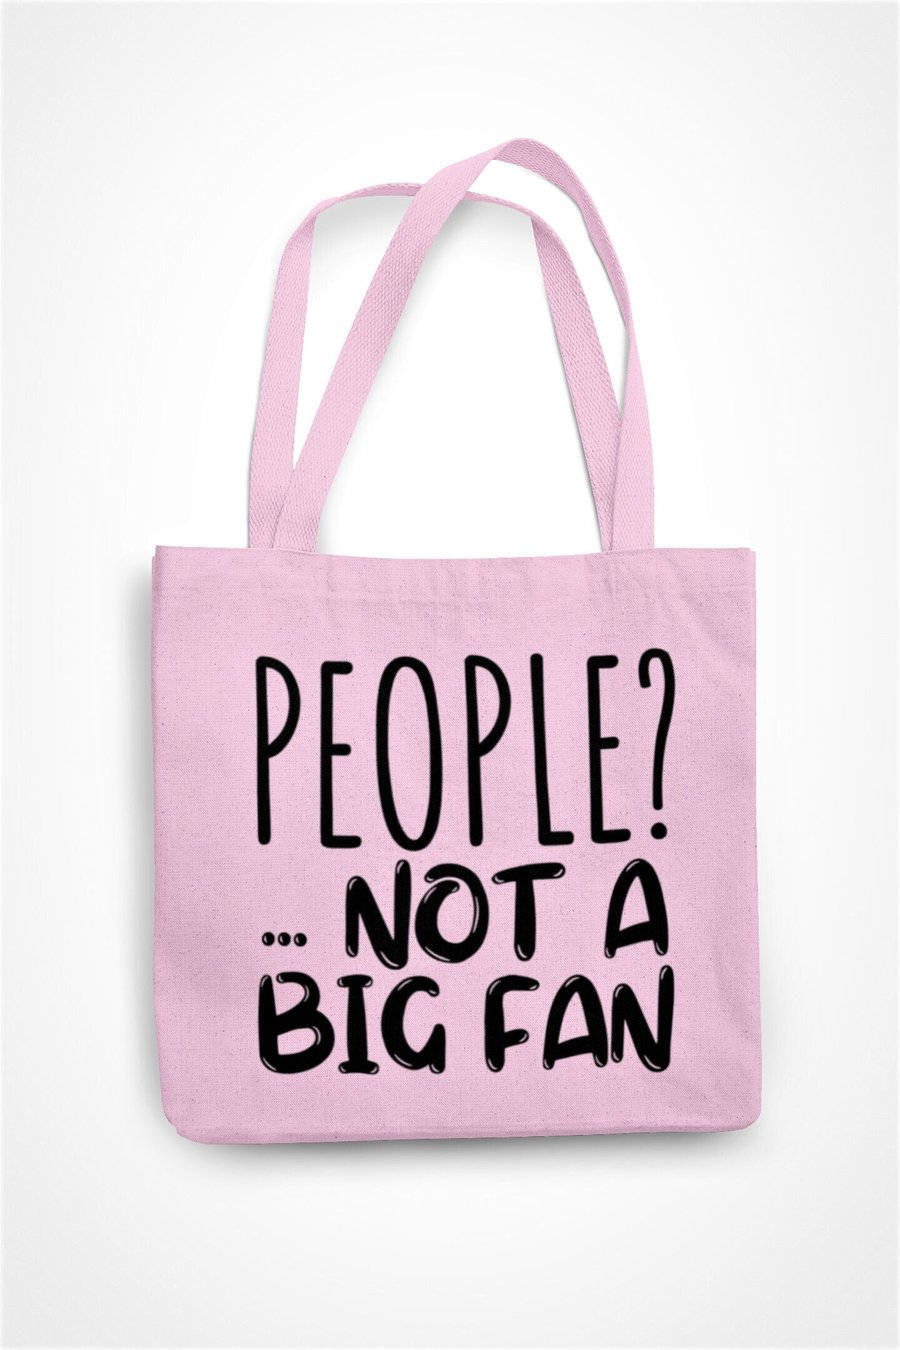 People? Not A Big Fan Tote Bag Funny Sarcastic Anti Social Shopping Bag Joke 